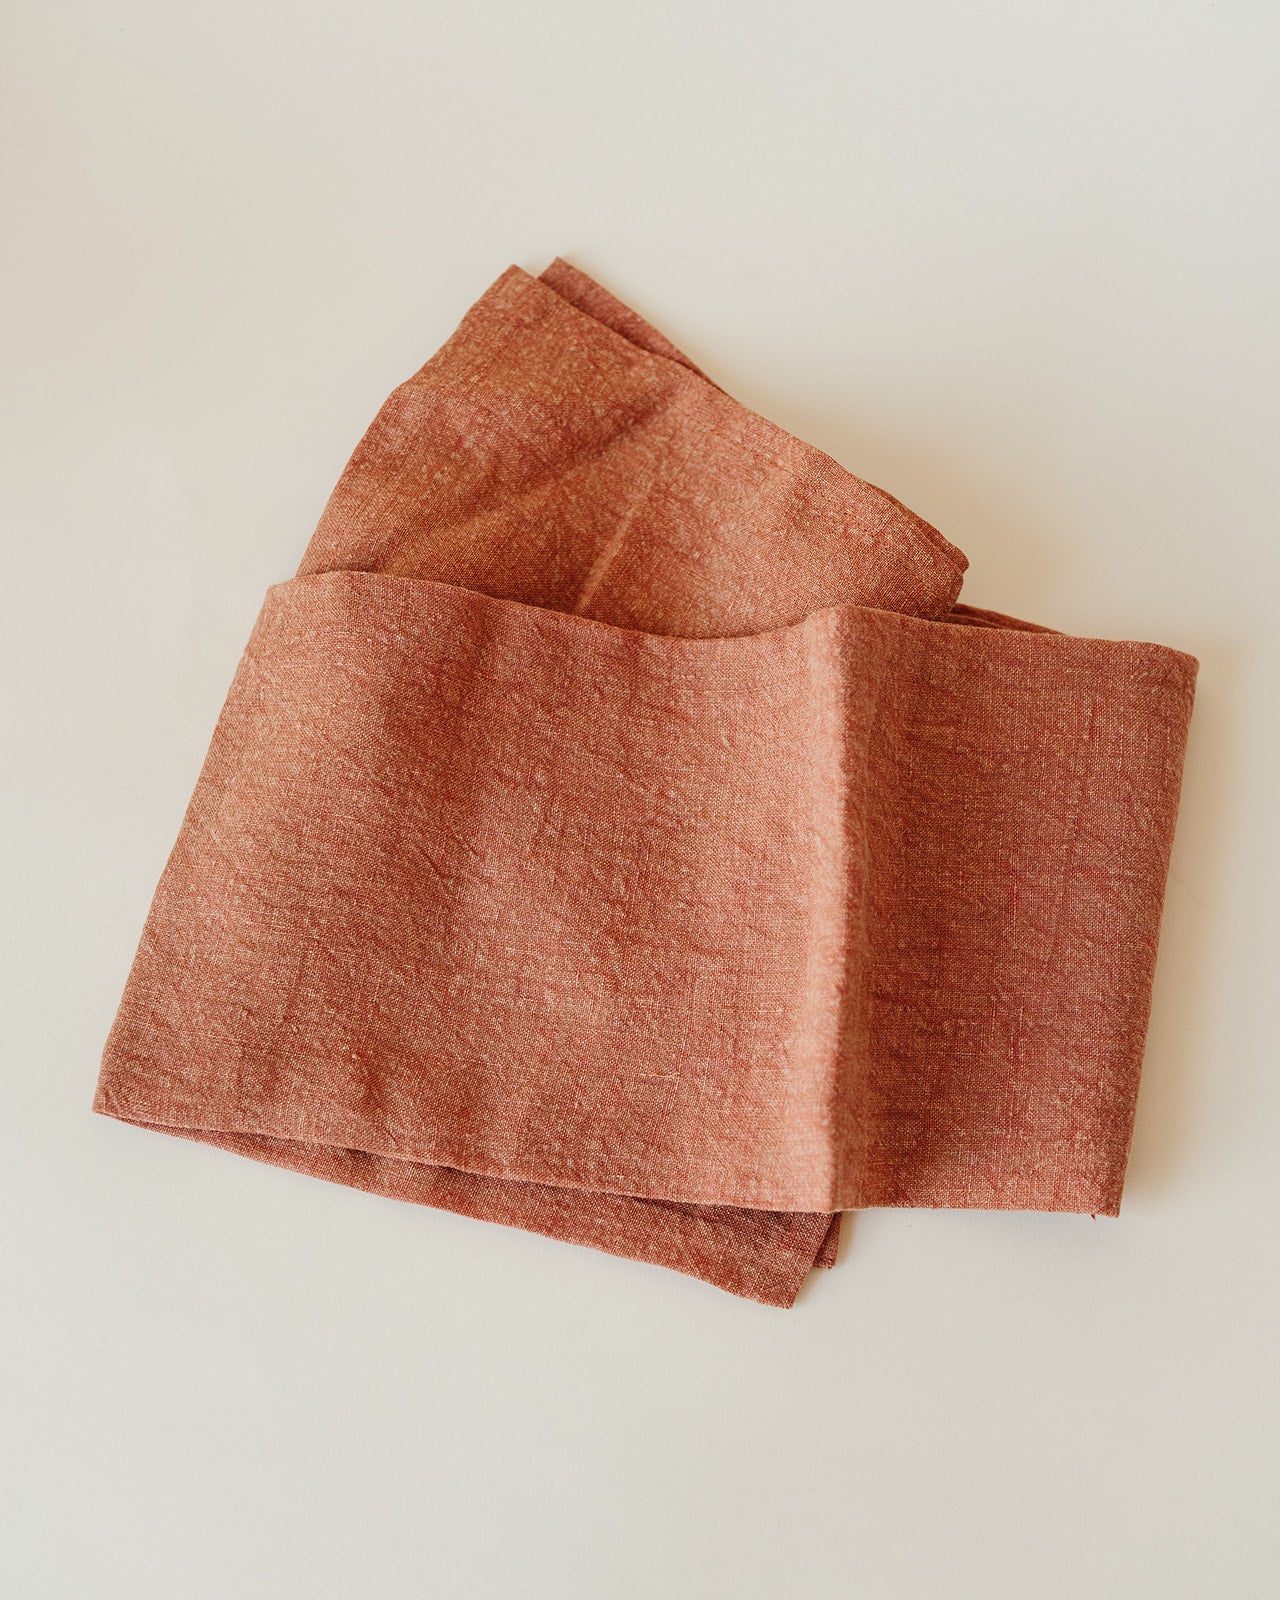 Linen Kitchen Towel in Plaid - Olive + Rose